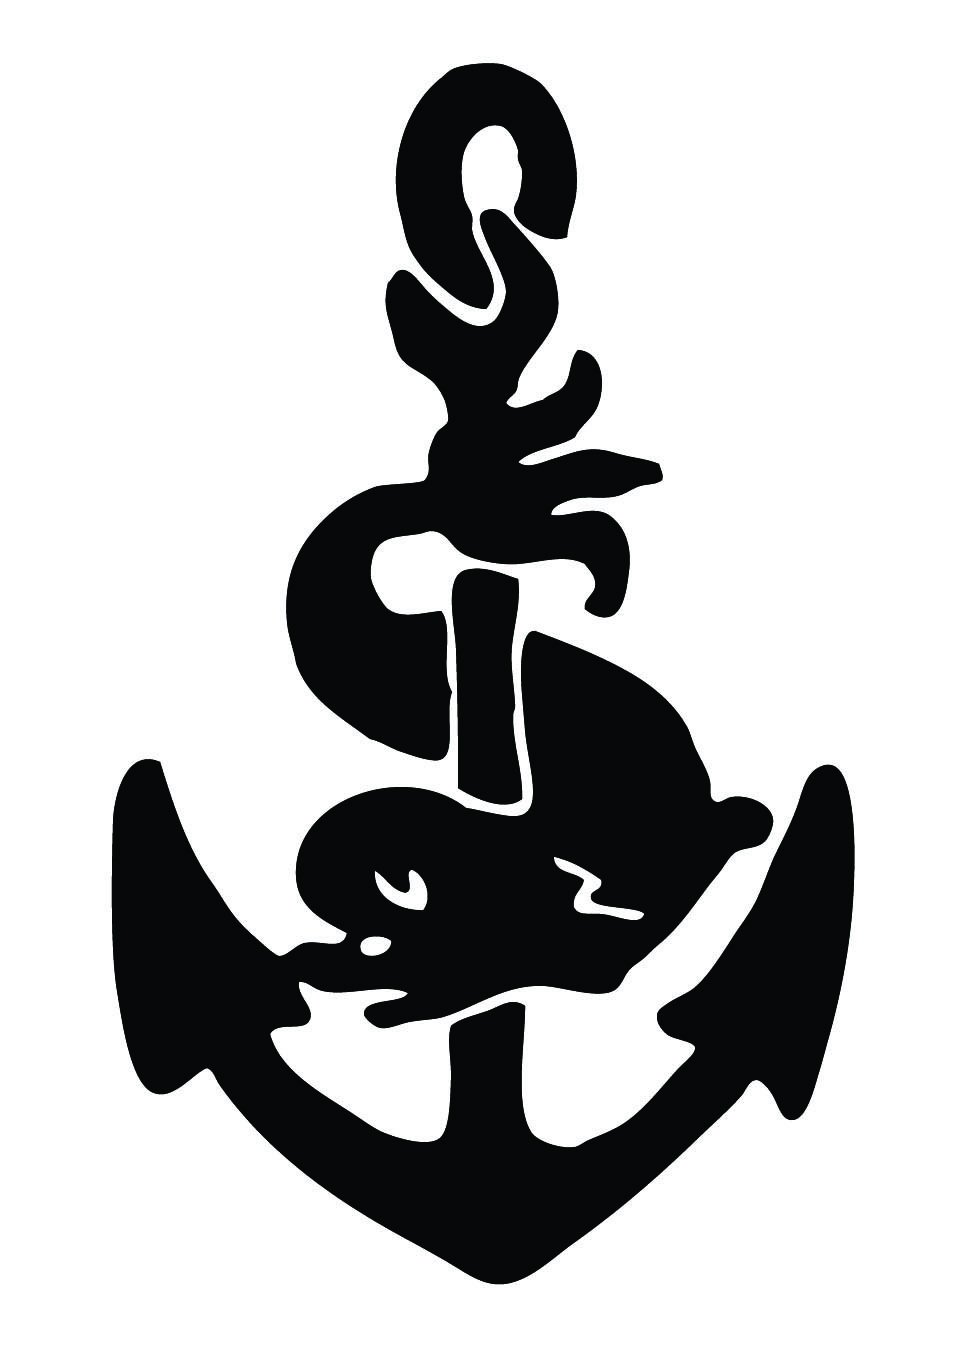 Vintage nautical clip art 2 anchor graphics the fairy